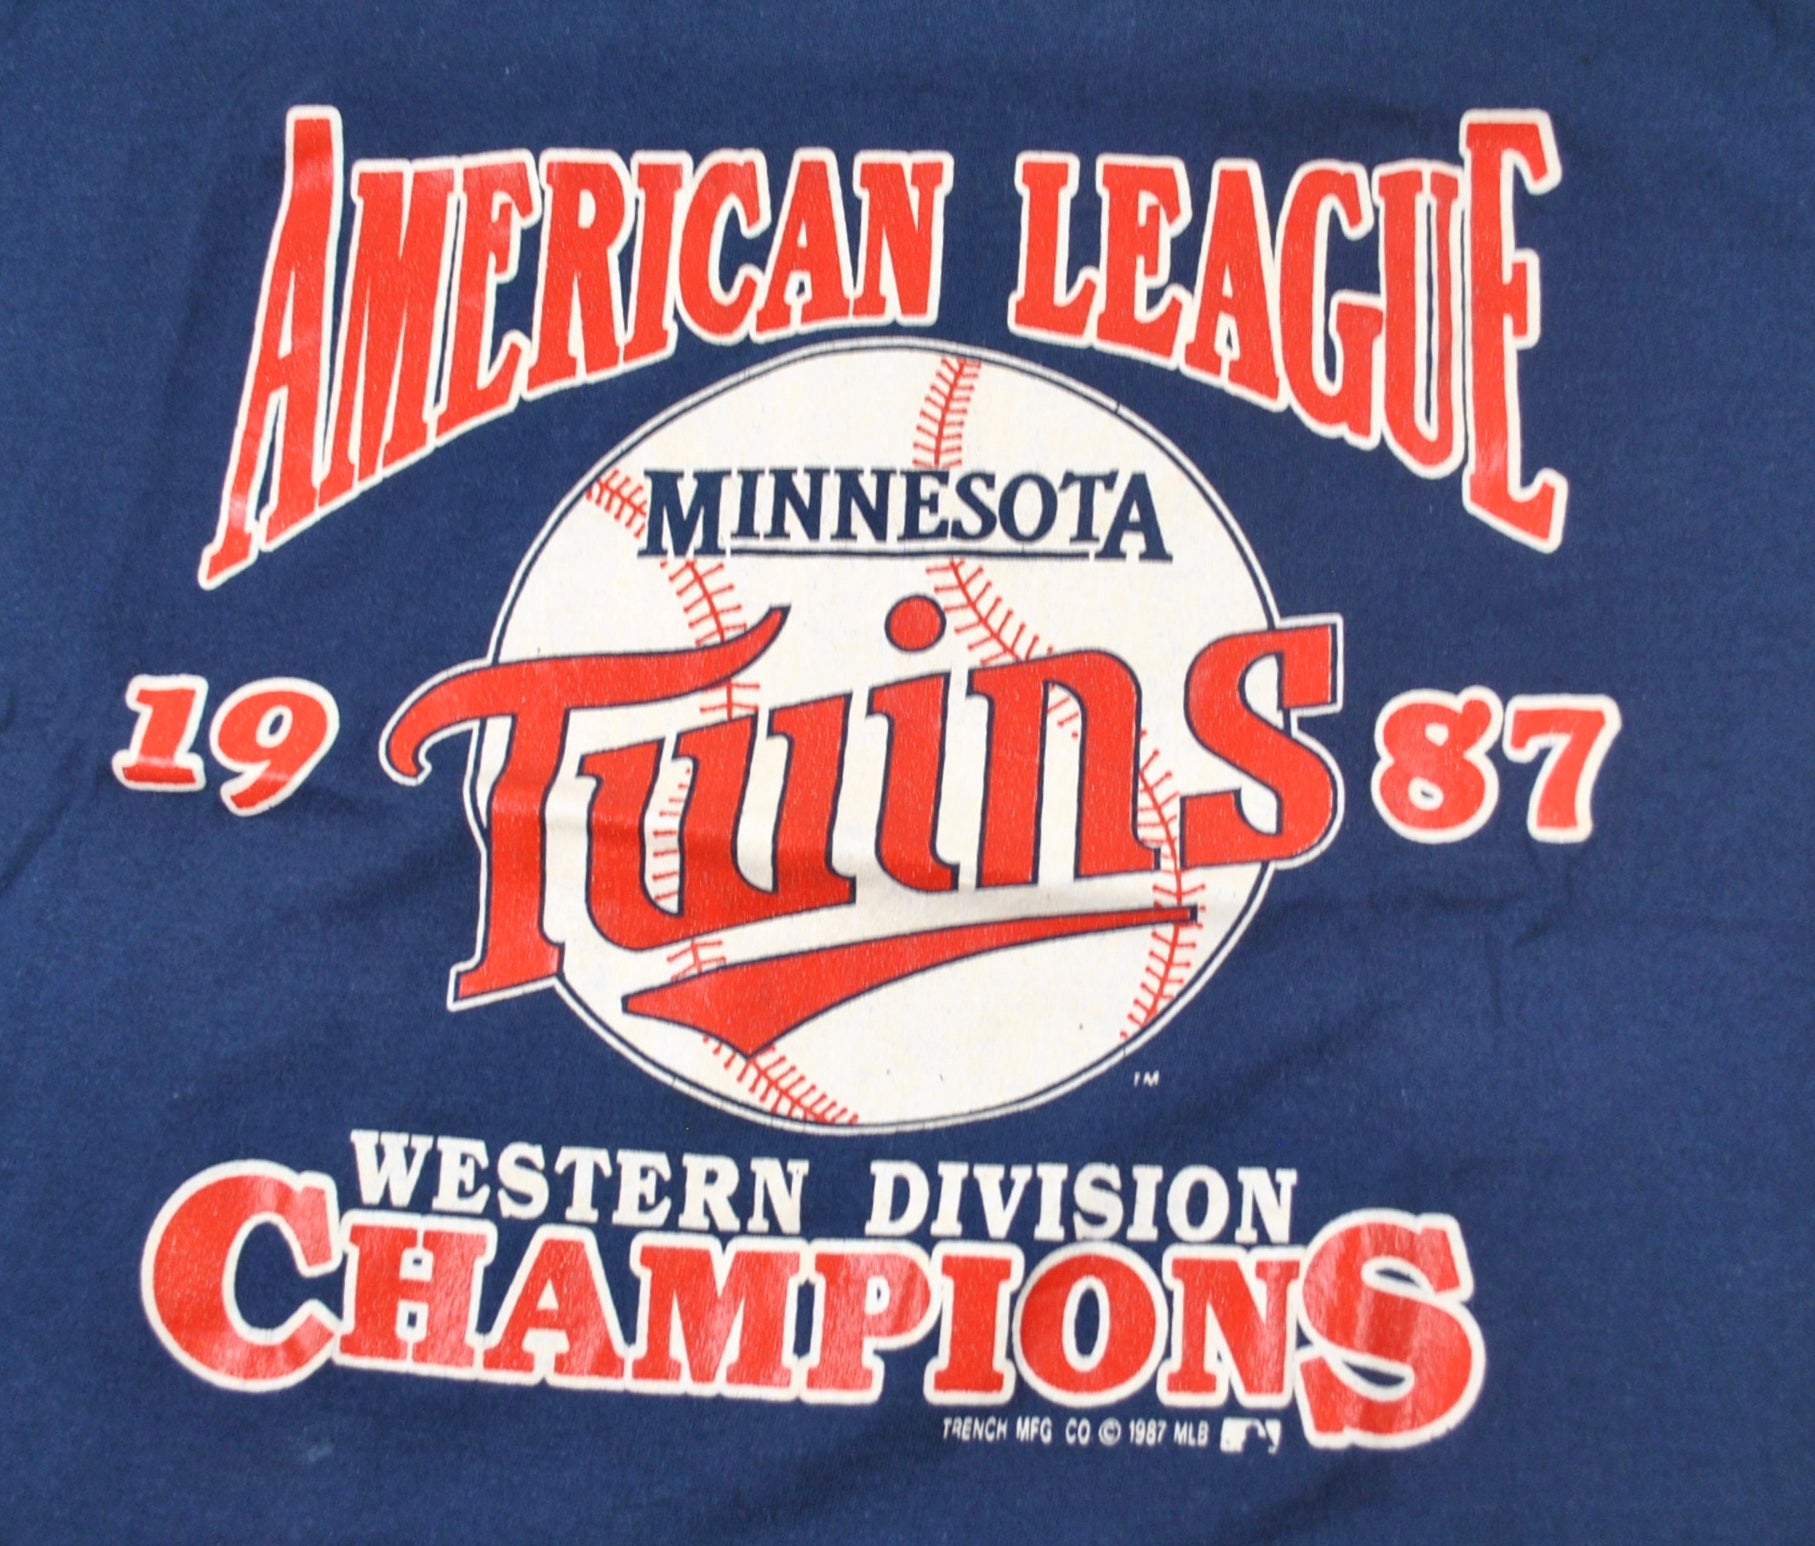 World Series Minnesota Twins MLB Jerseys for sale